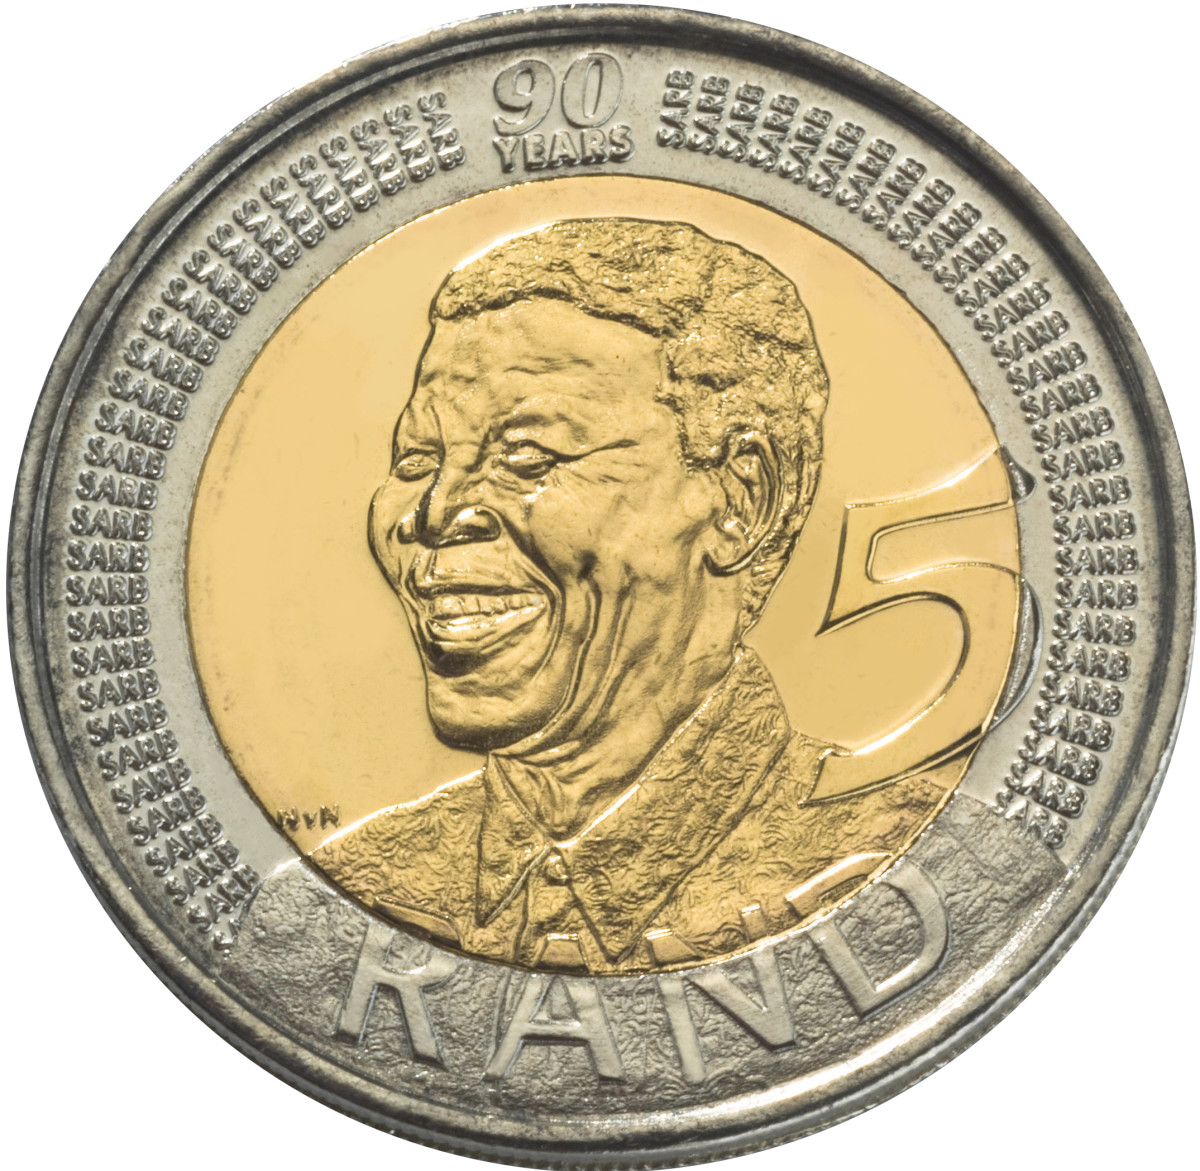 The popular bi-metallic circulating 2008 5 rand celebrating Nelson Mandela’s 90th birthday.